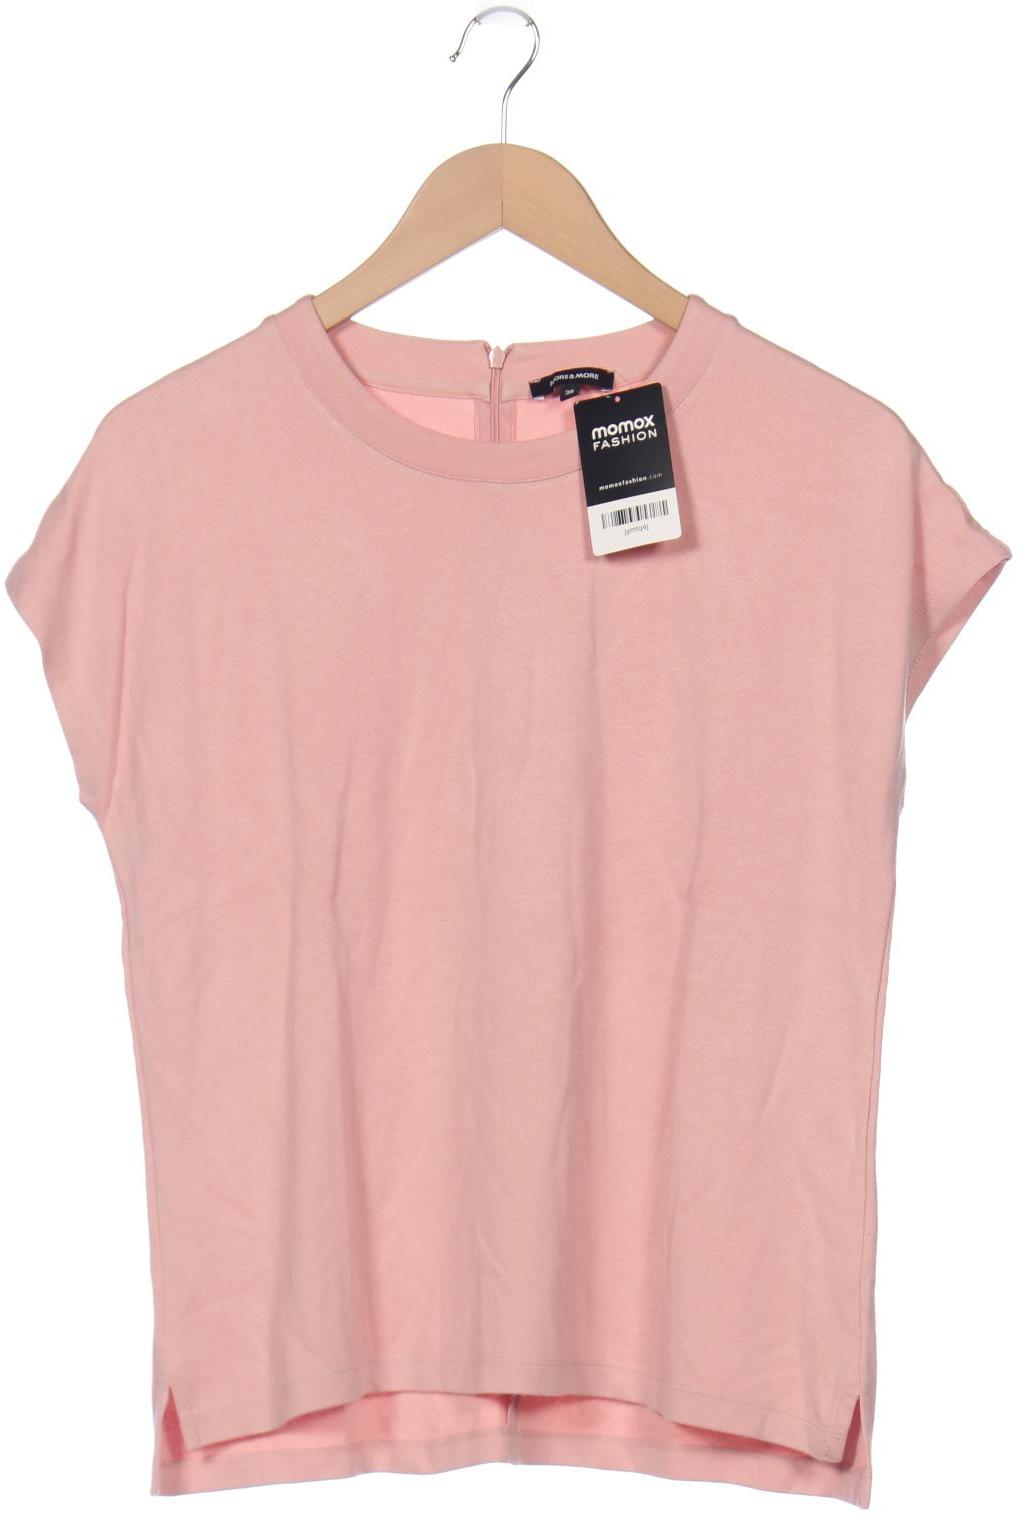 More & More Damen T-Shirt, pink von MORE & MORE